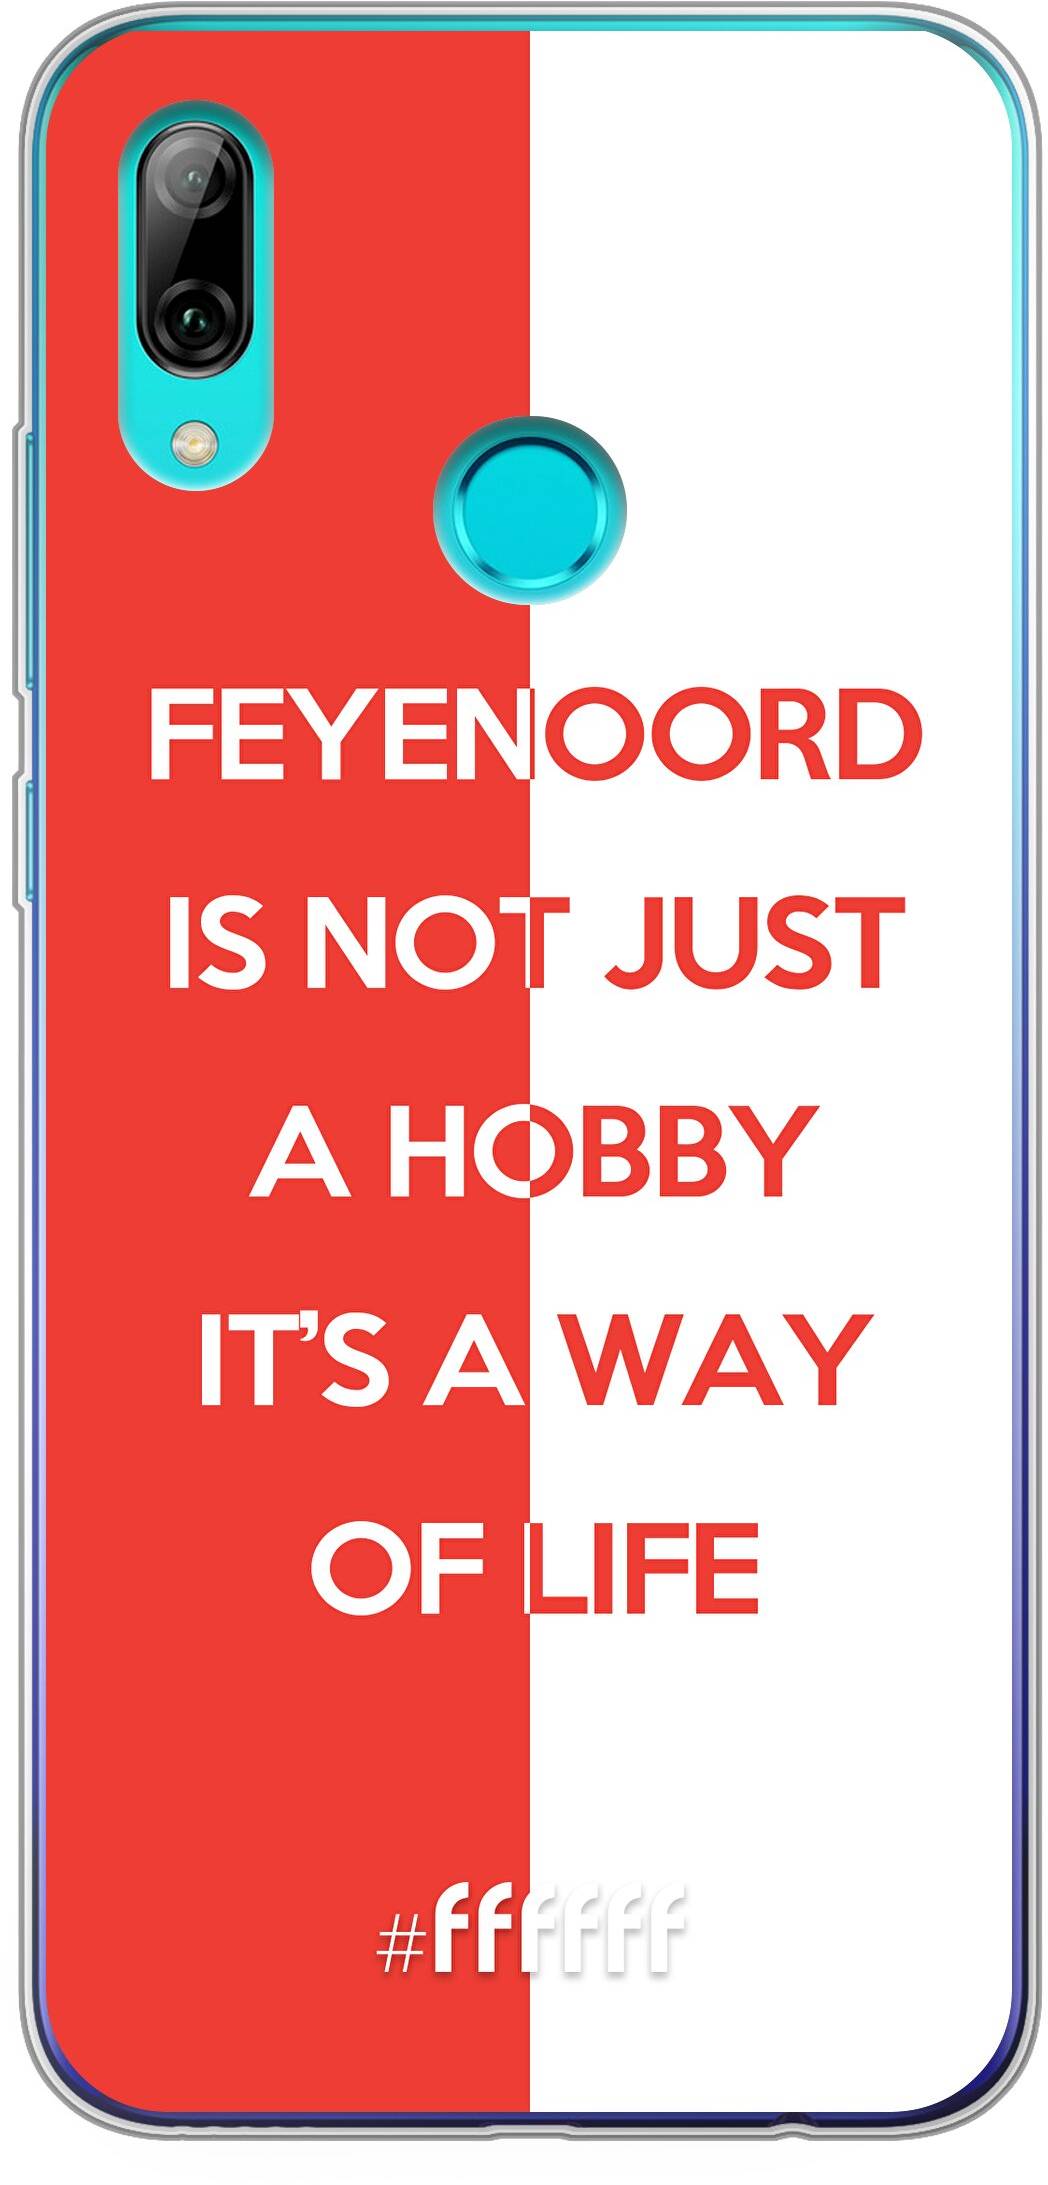 Feyenoord - Way of life P Smart (2019)